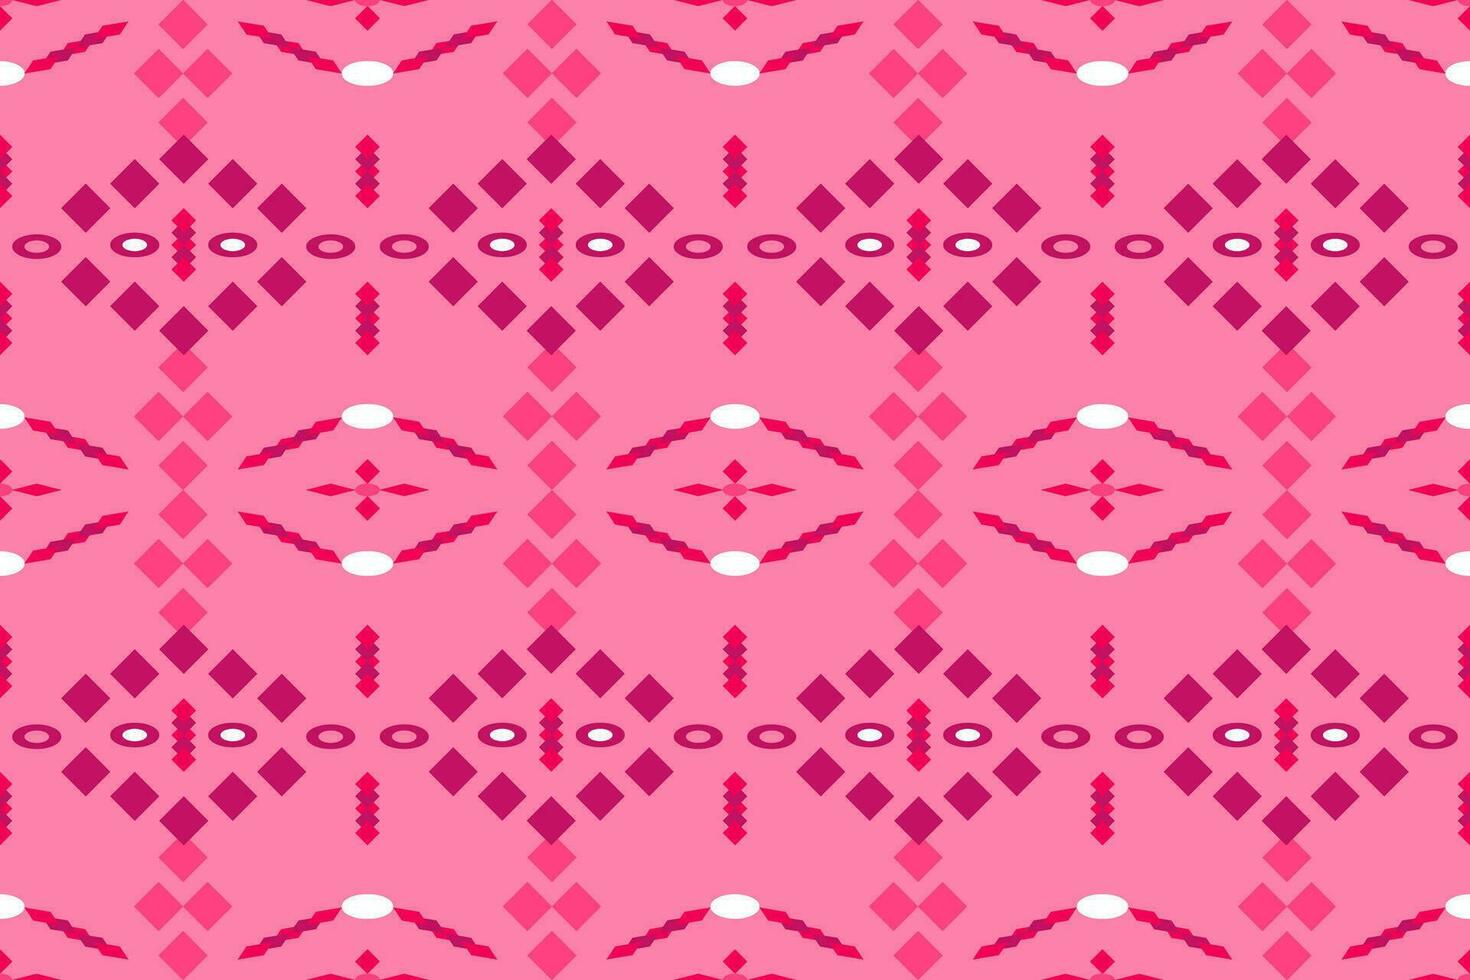 antecedentes textil vector ilustración florido elegante Clásico estilo.geométrico étnico oriental modelo tradicional azteca estilo diseño.abstracto para textura,tela,ropa,envoltura,alfombra.